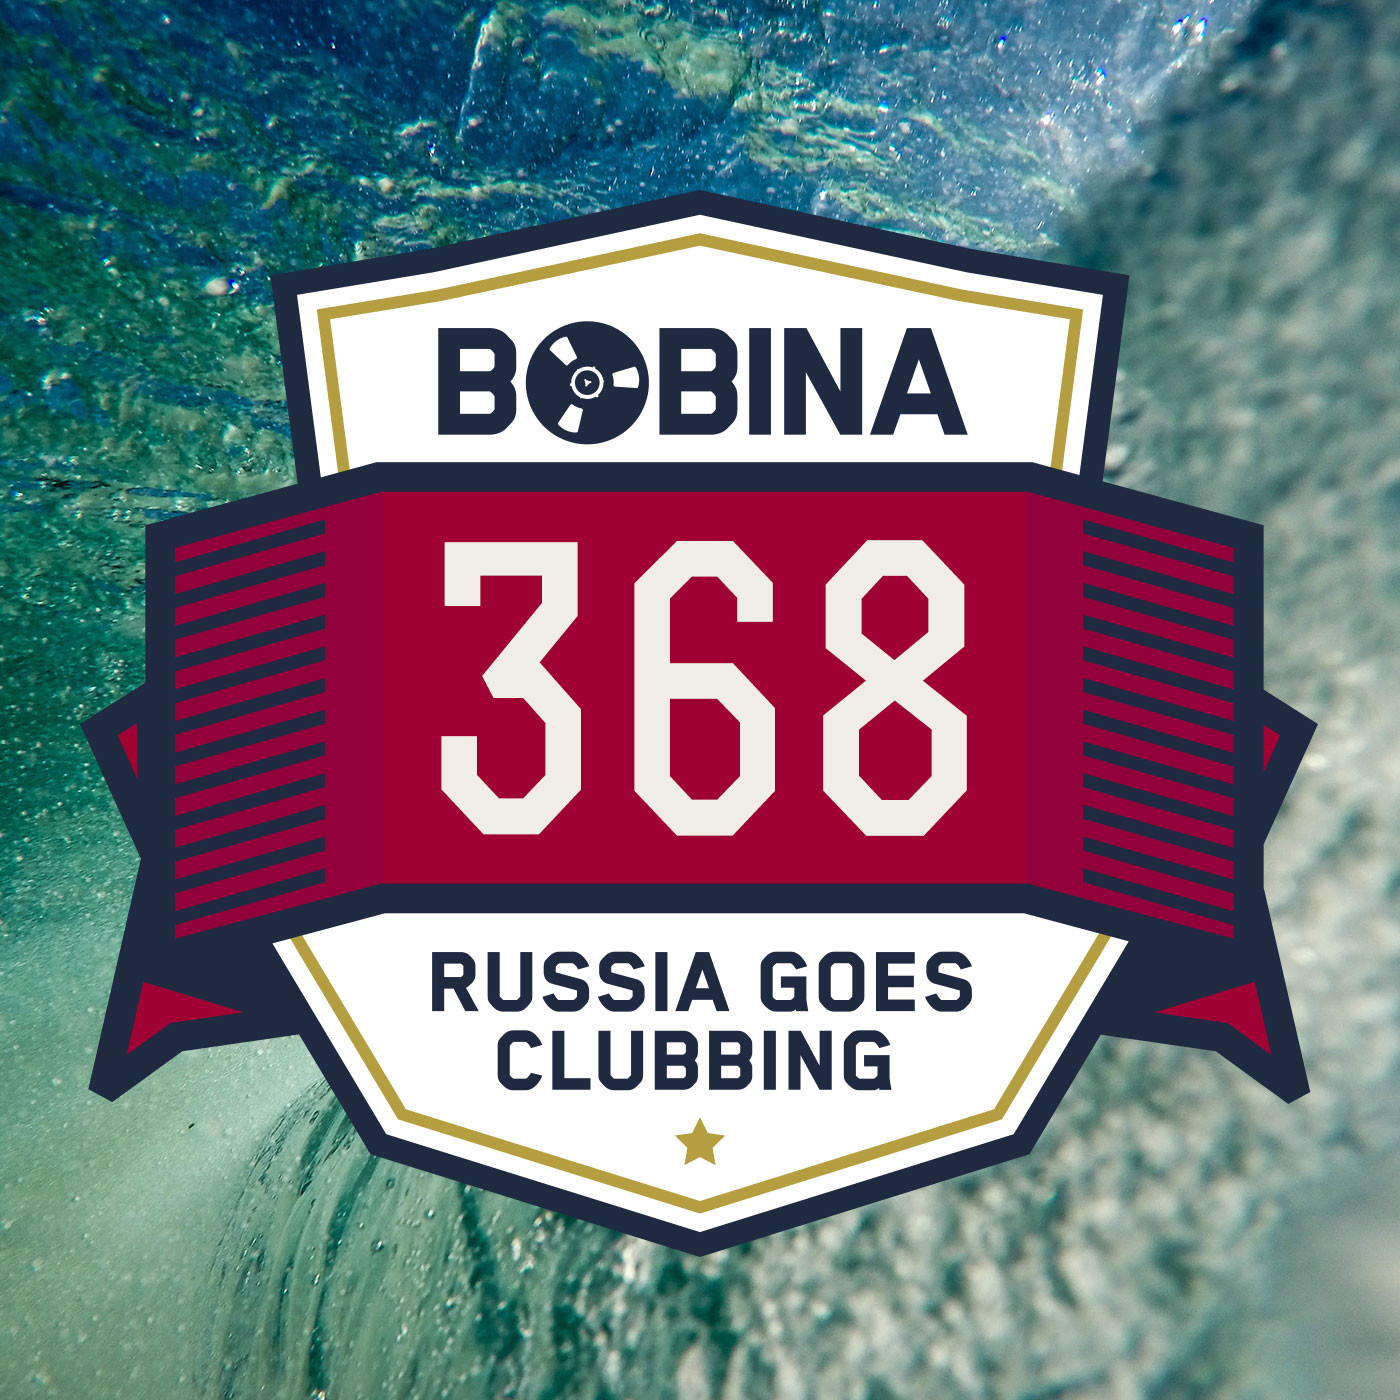 Nr. 368 Russia Goes Clubbing